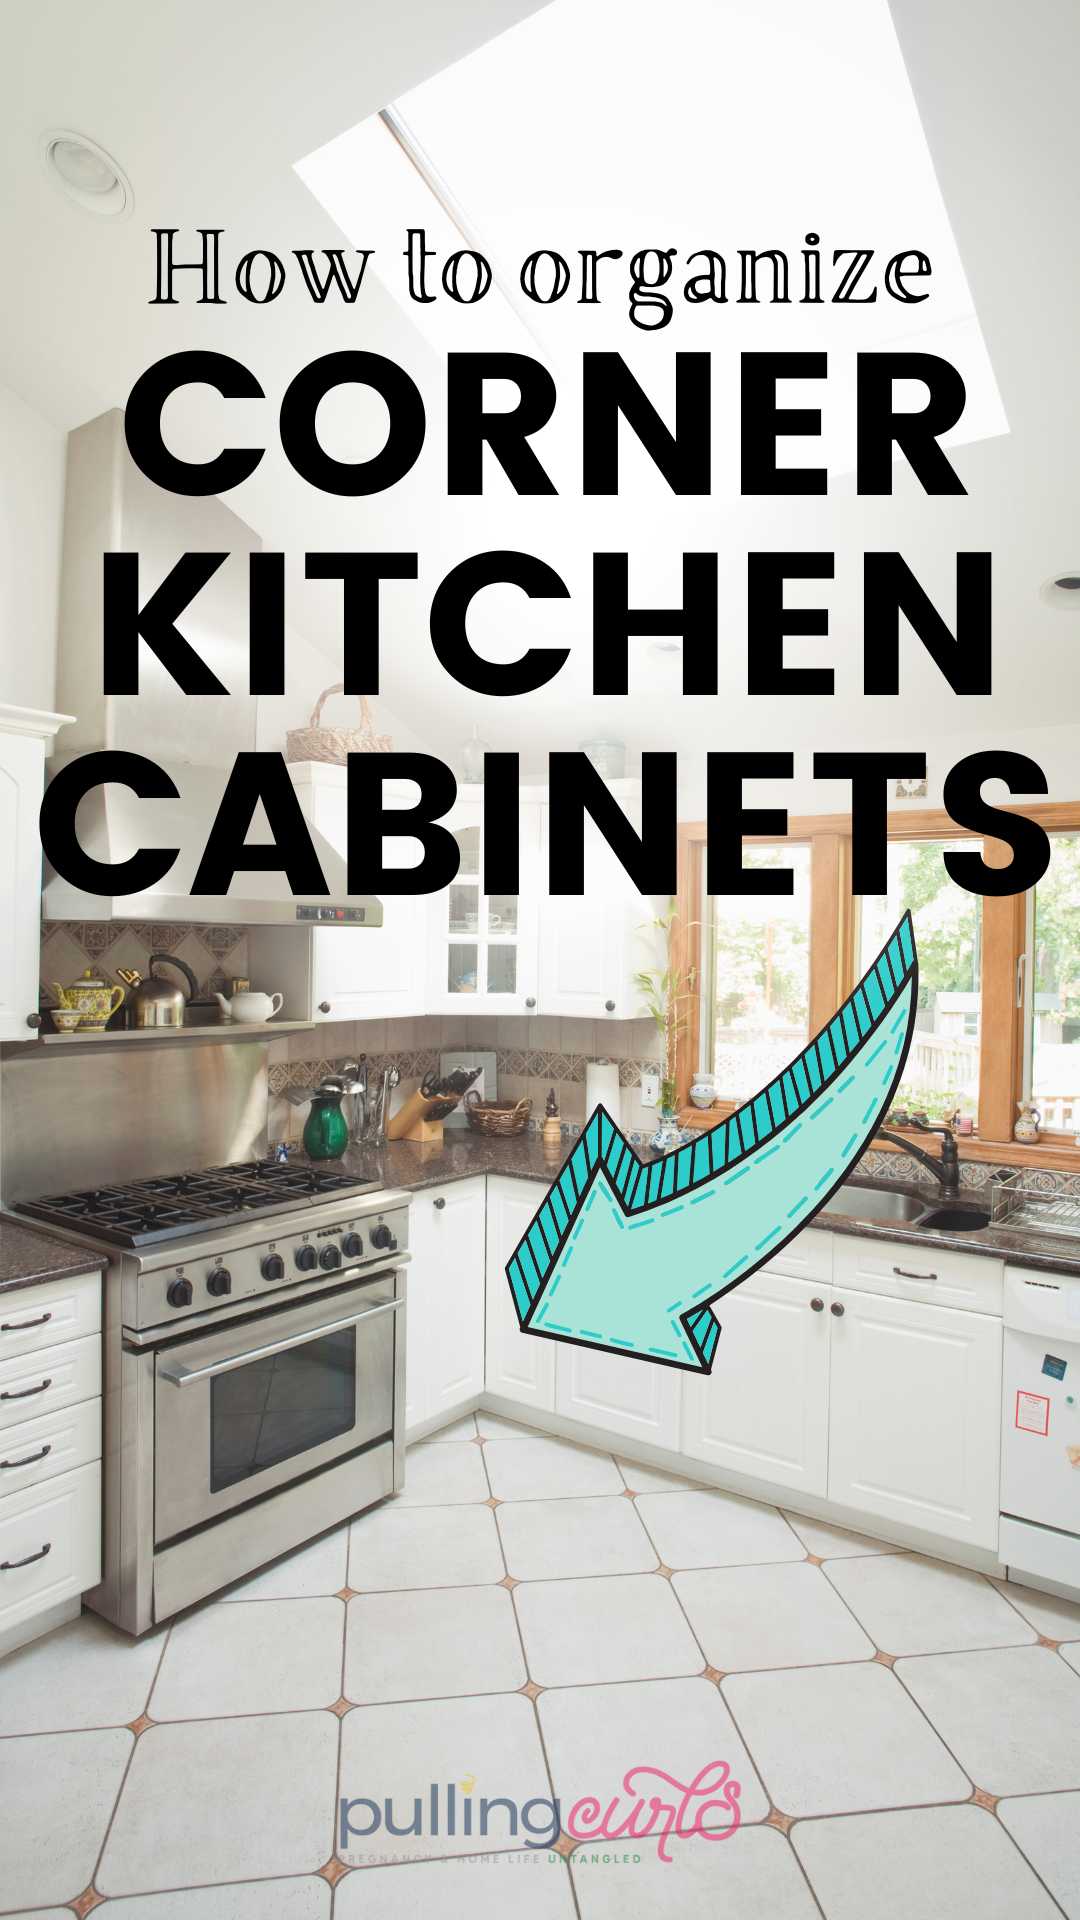 https://www.pullingcurls.com/wp-content/uploads/2021/11/how-to-organize-a-corner-cabinet.jpg